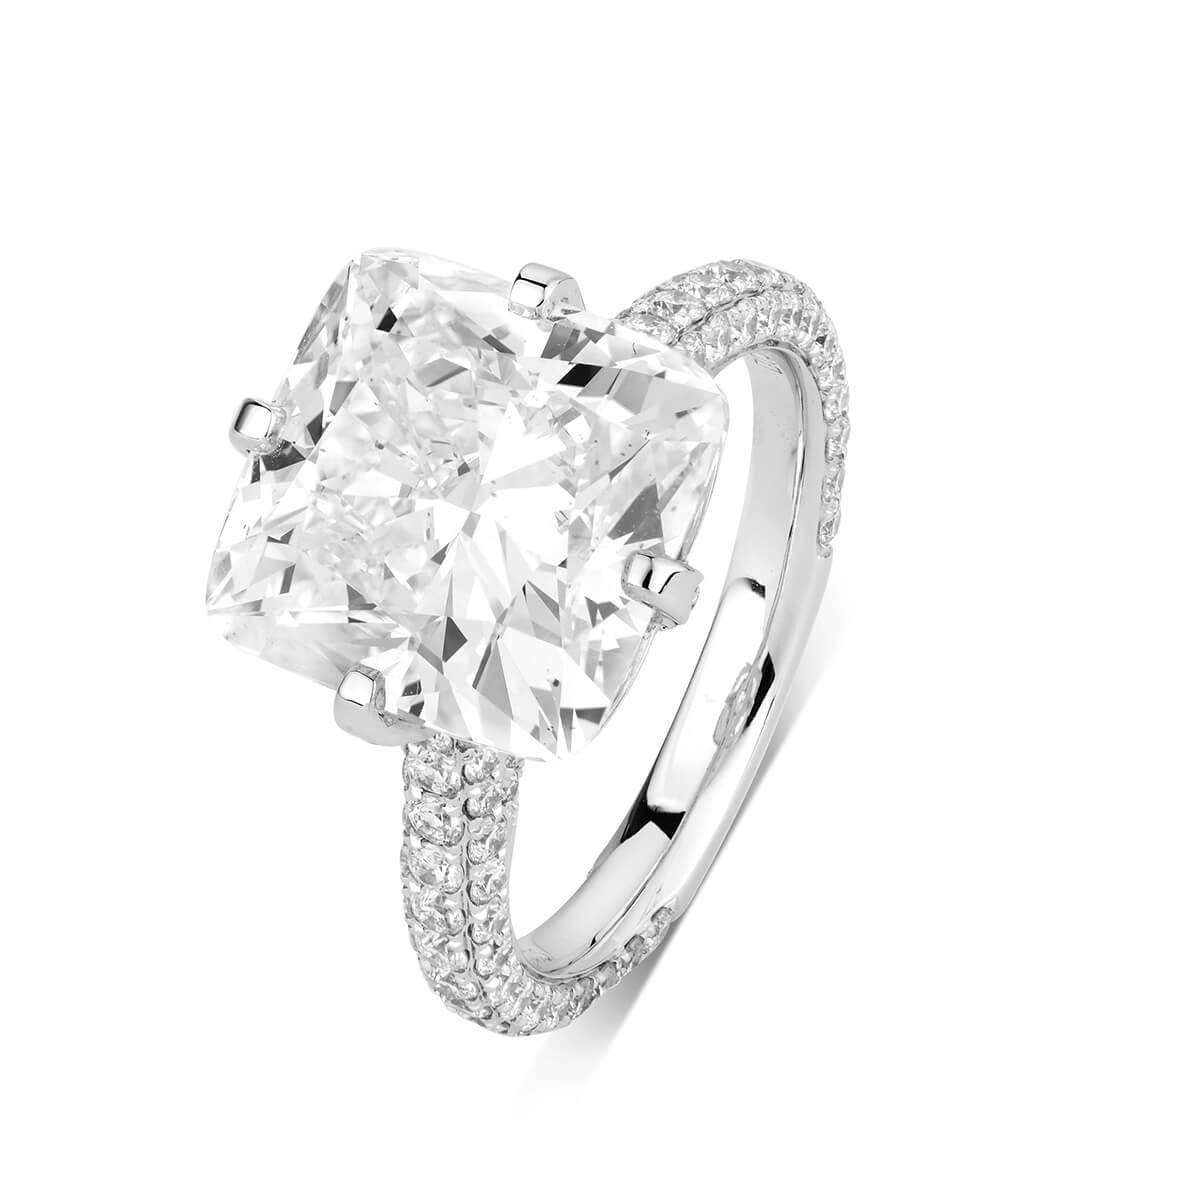  White Diamond Ring, 8.71 Ct. TW, Cushion shape, GIA Certified, 2183142510